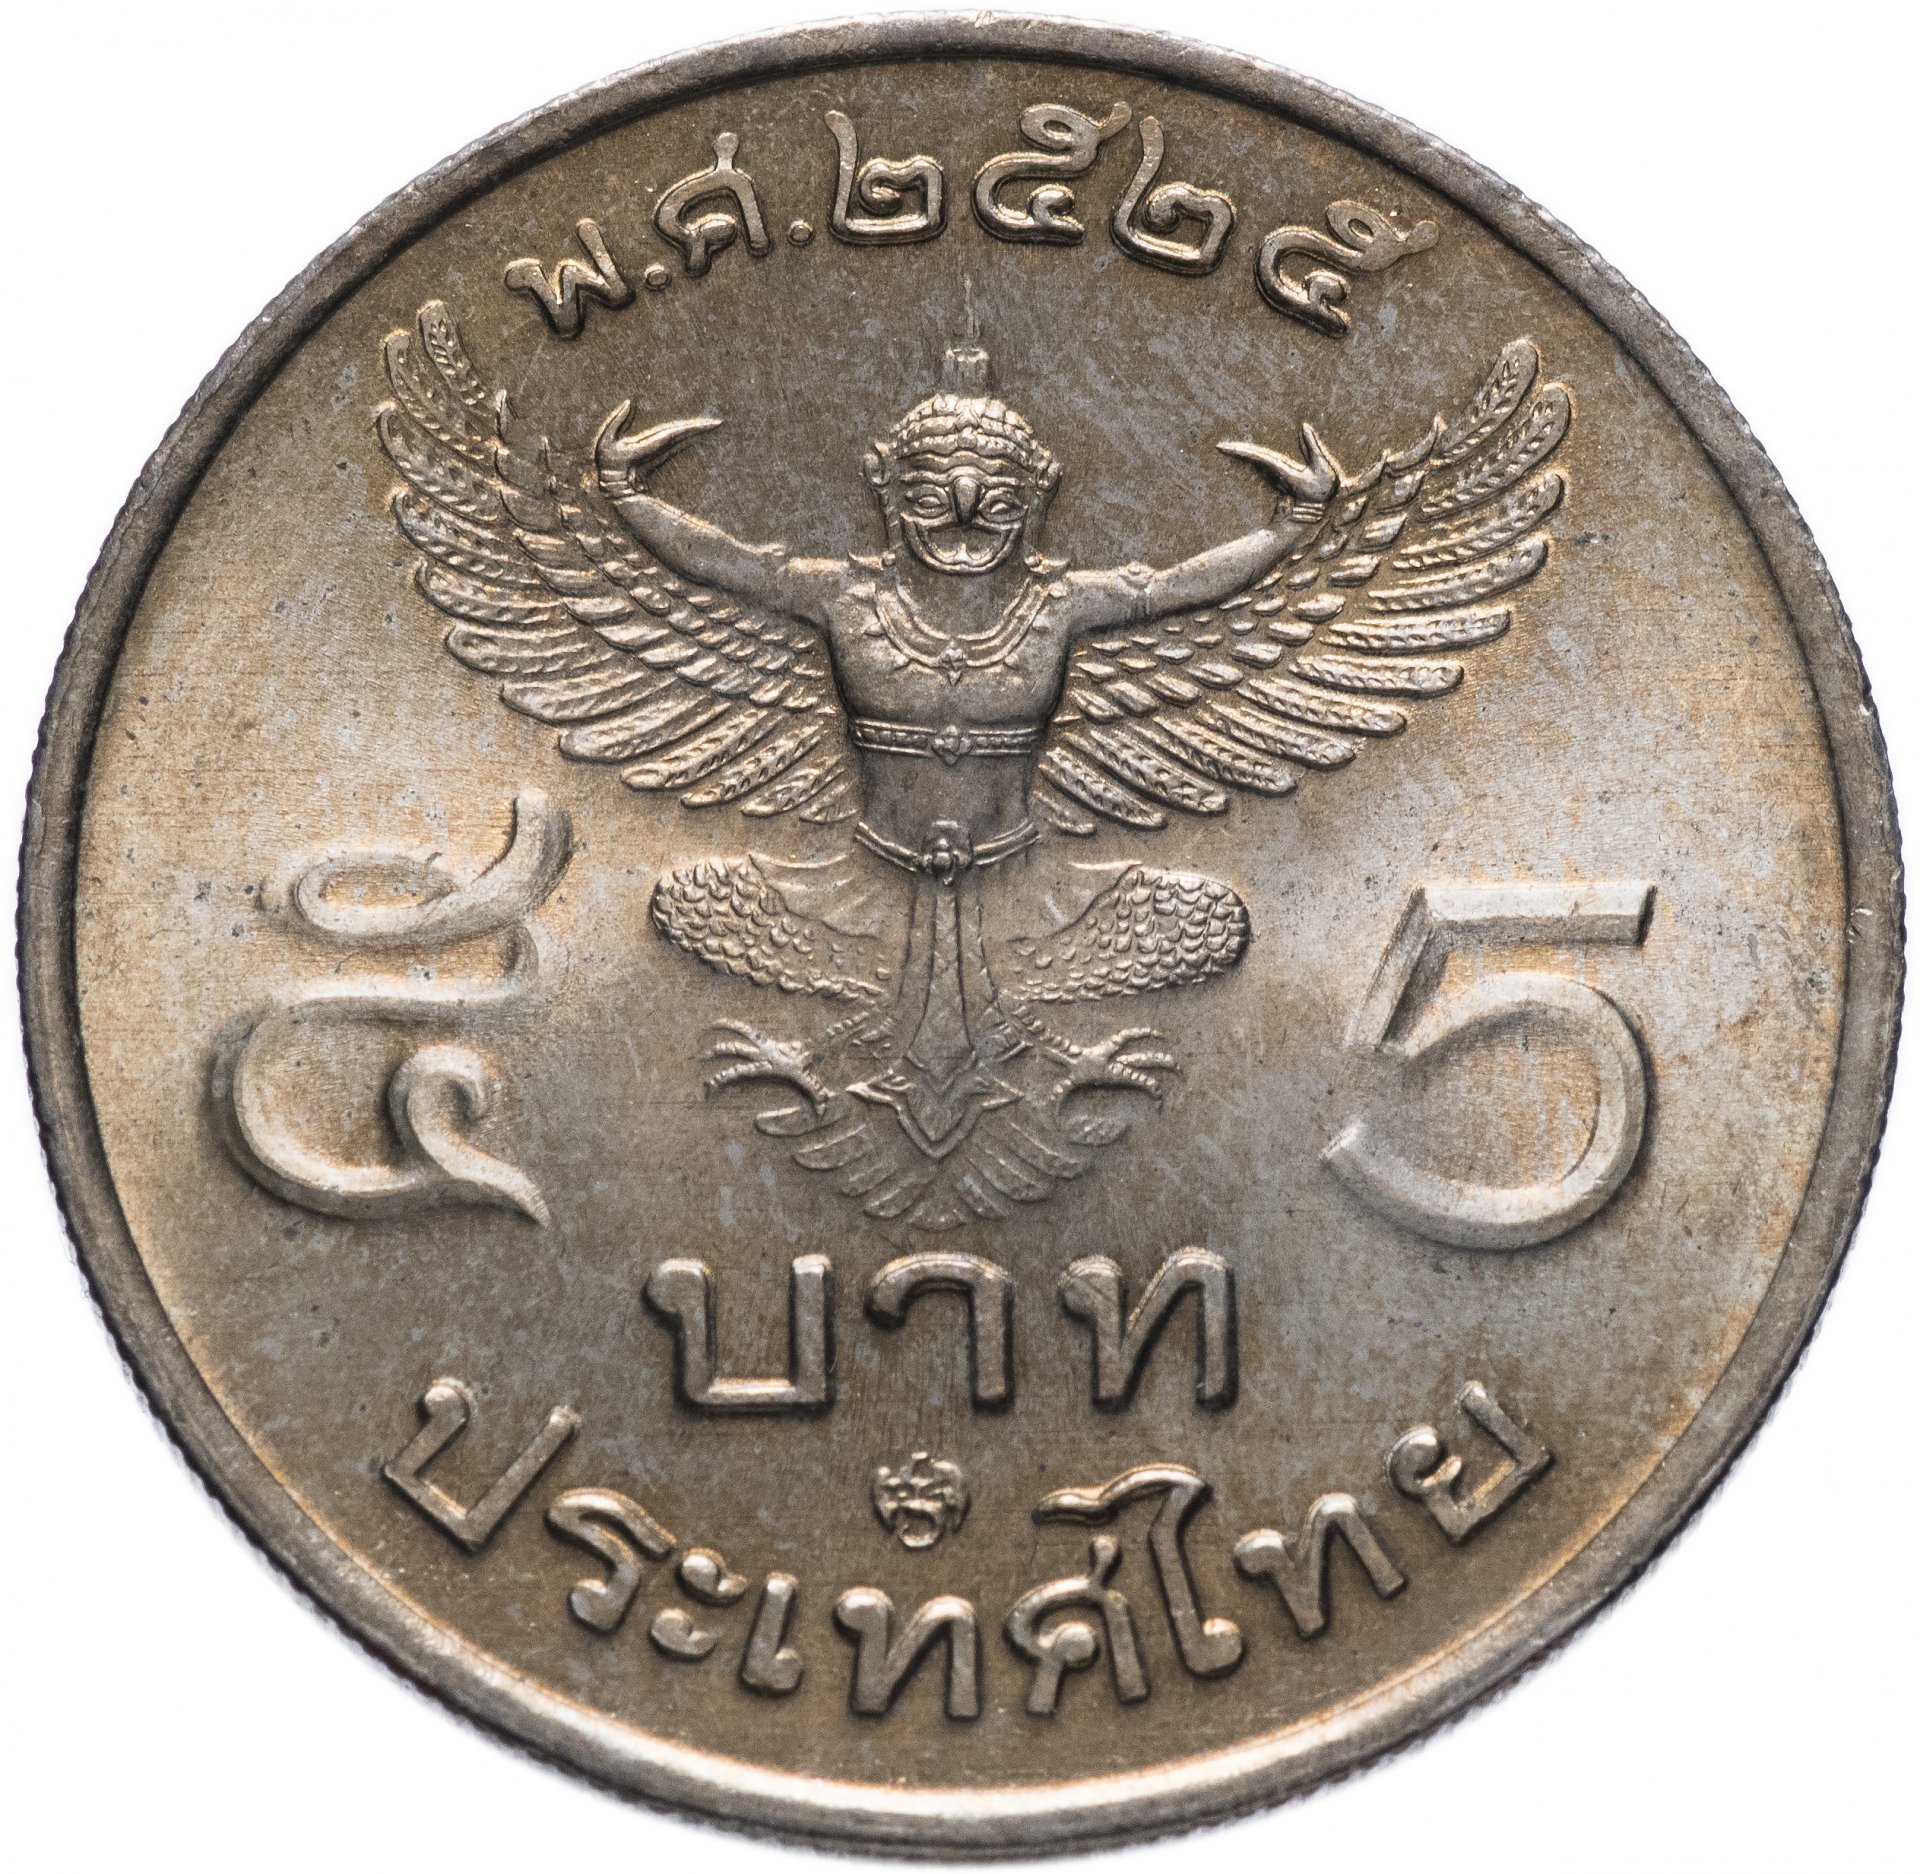 5 батов в рублях. Тайланская монета 5 бат. Монеты Тайланда 5 бат. Монеты Таиланд 1 бат 1982. Тайские монеты 5 бат.